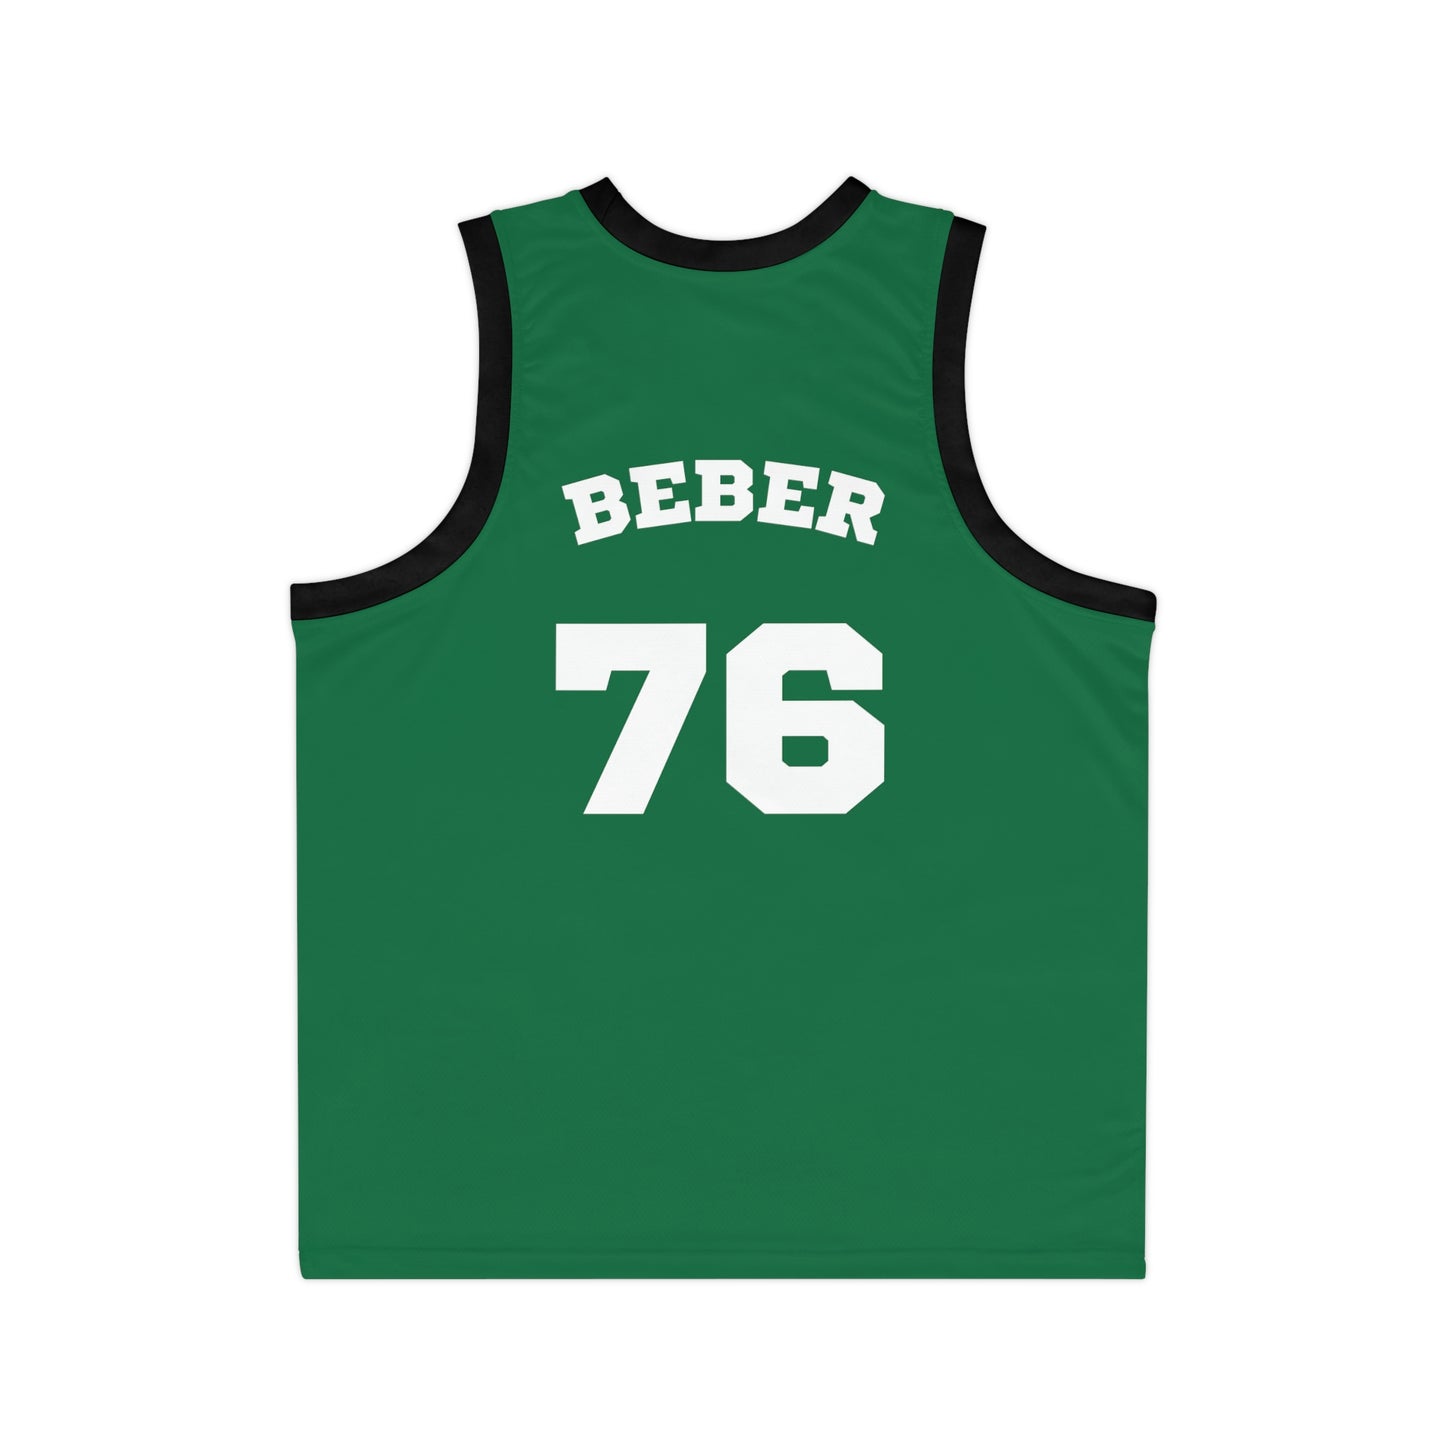 Beber Camp Adult Basketball Jersey